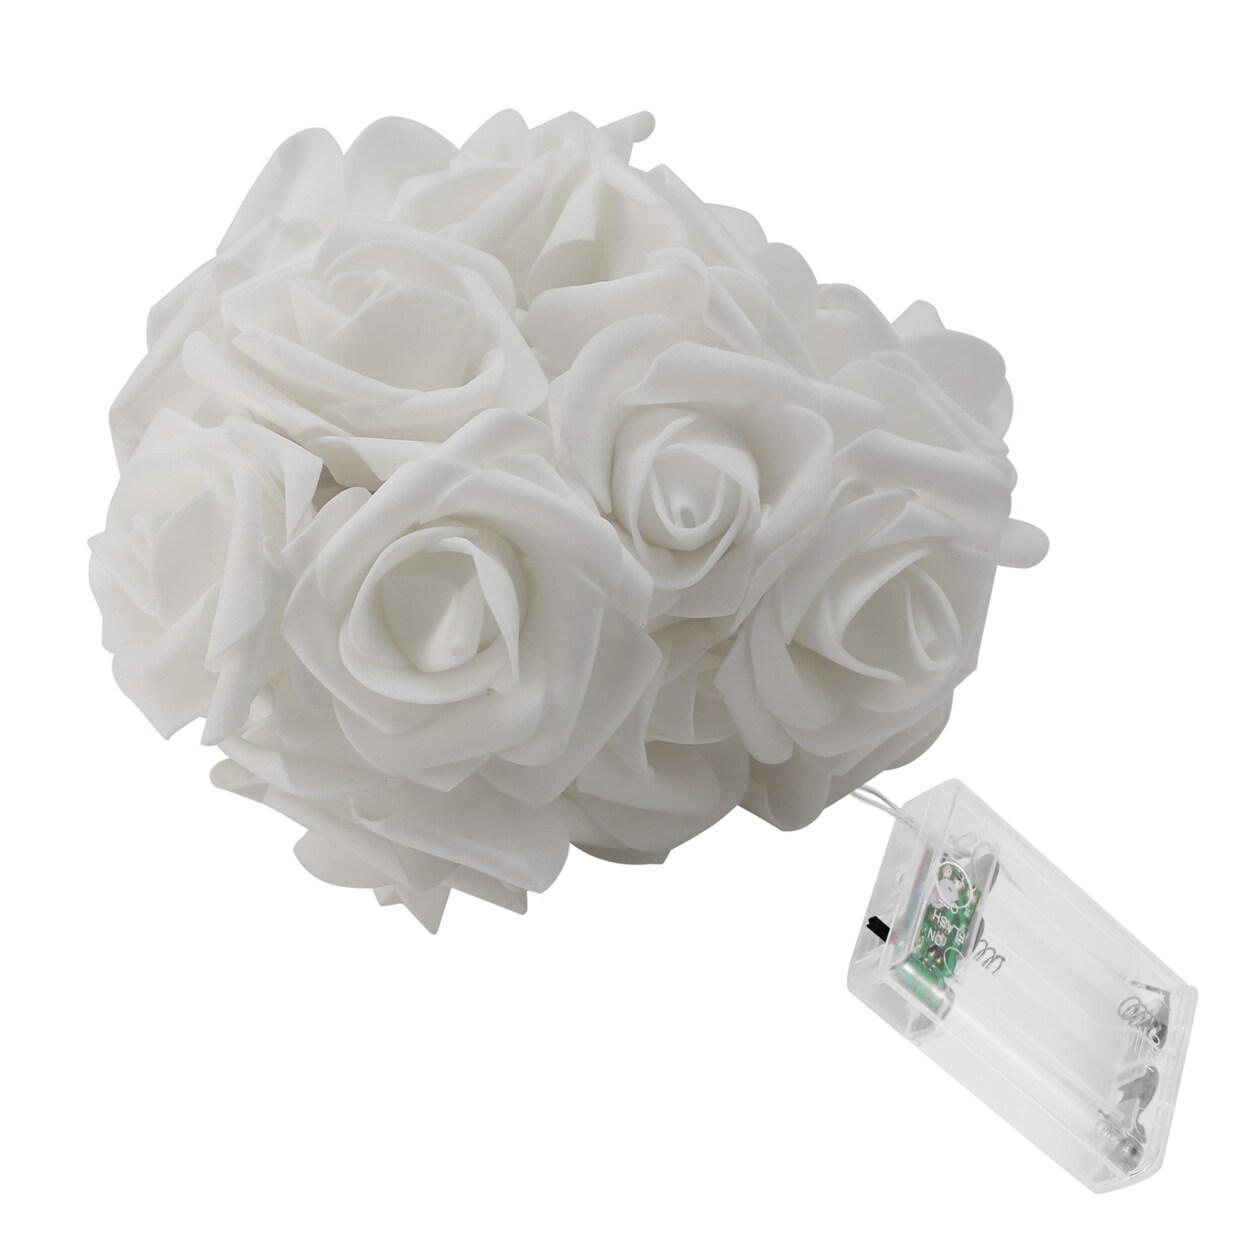 Global Phoenix 40 LEDs Rose Flower String Lights 10ft Battery Operated Decorative Lights for Anniversary Valentine Wedding Bedroom